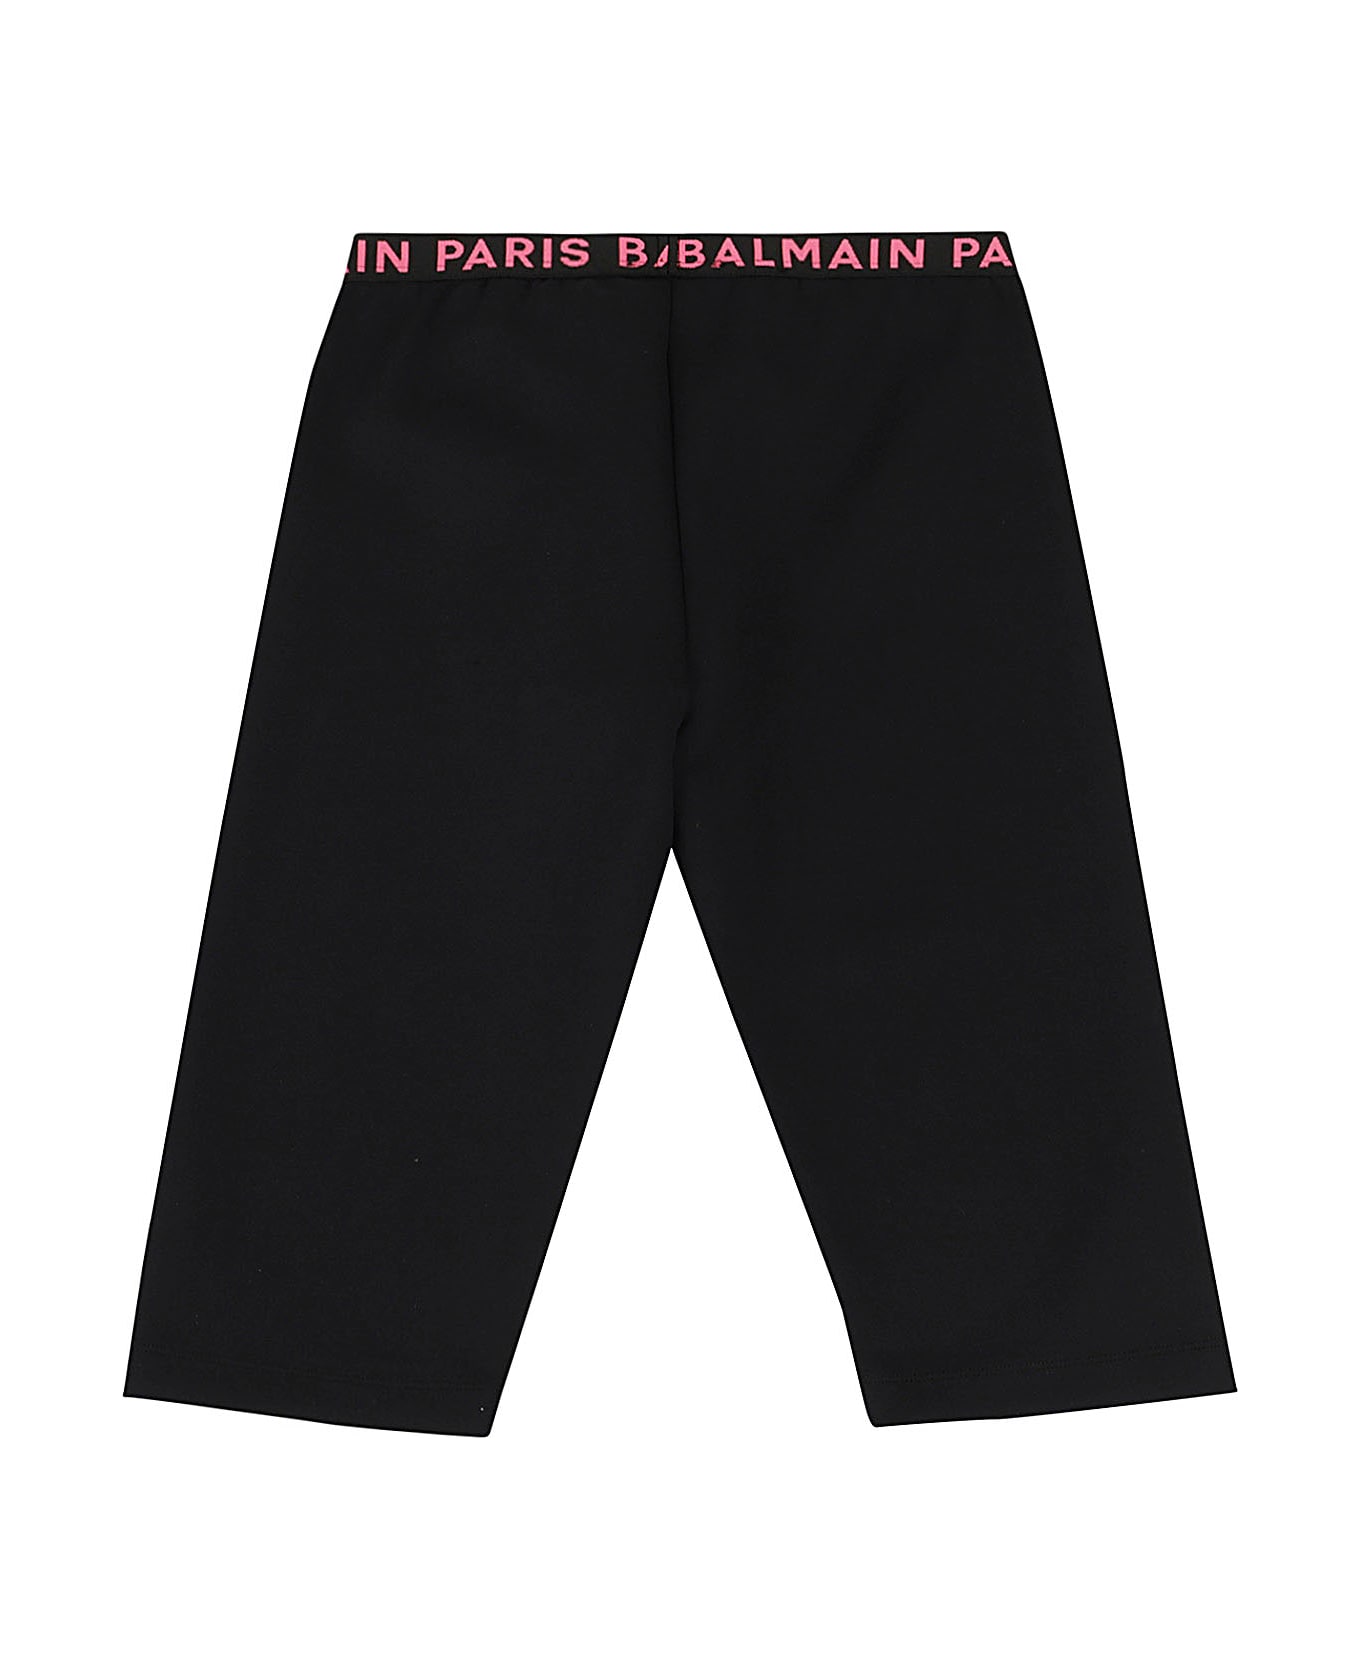 Balmain Sport Shorts - Fu Black Fuchsia